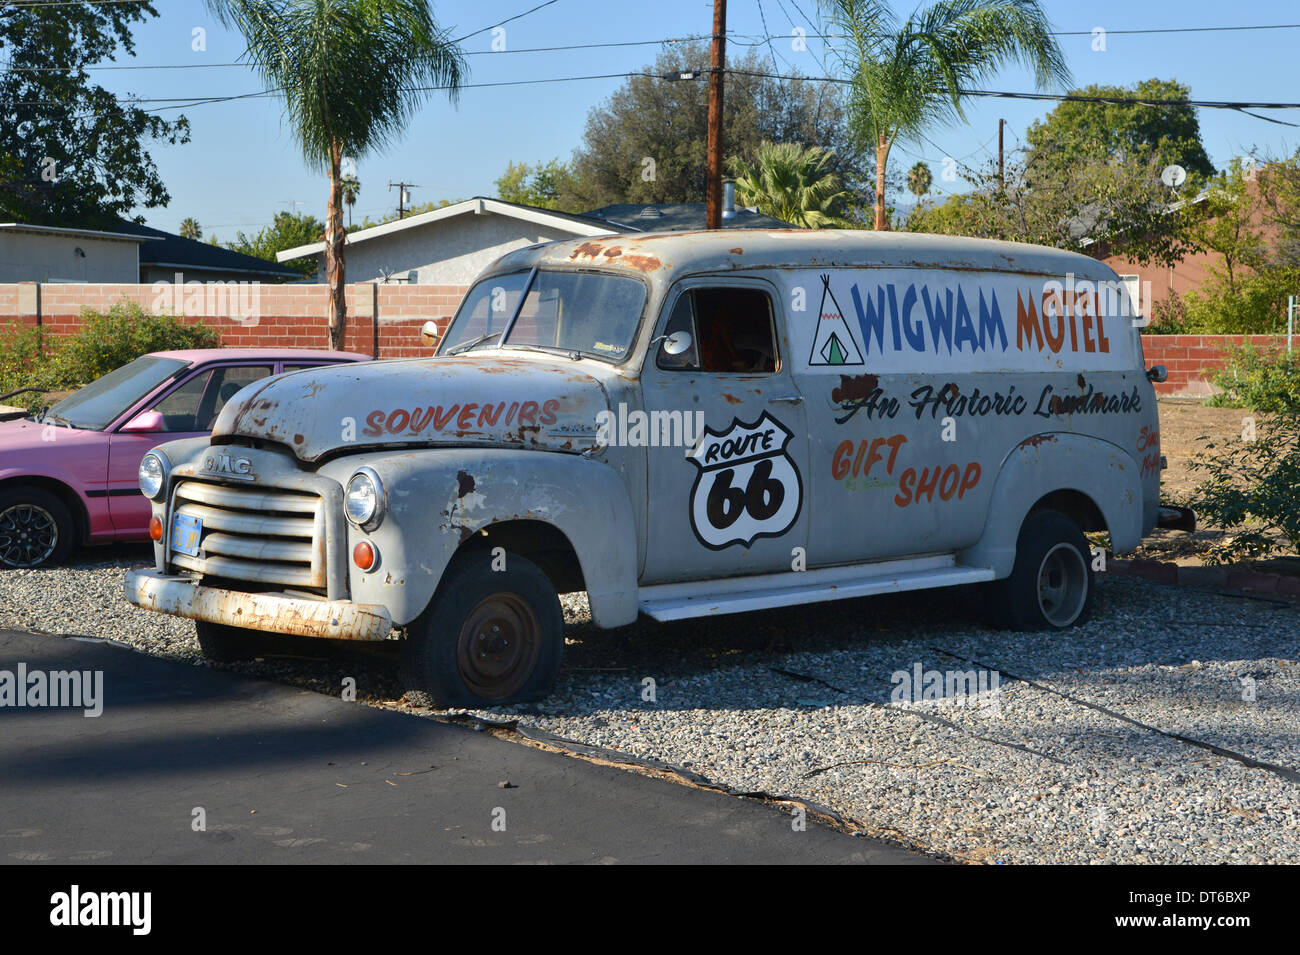 Classic GMC panel van sign written for the Wigwam Motel on Route 66 in San Bernardino California Stock Photo